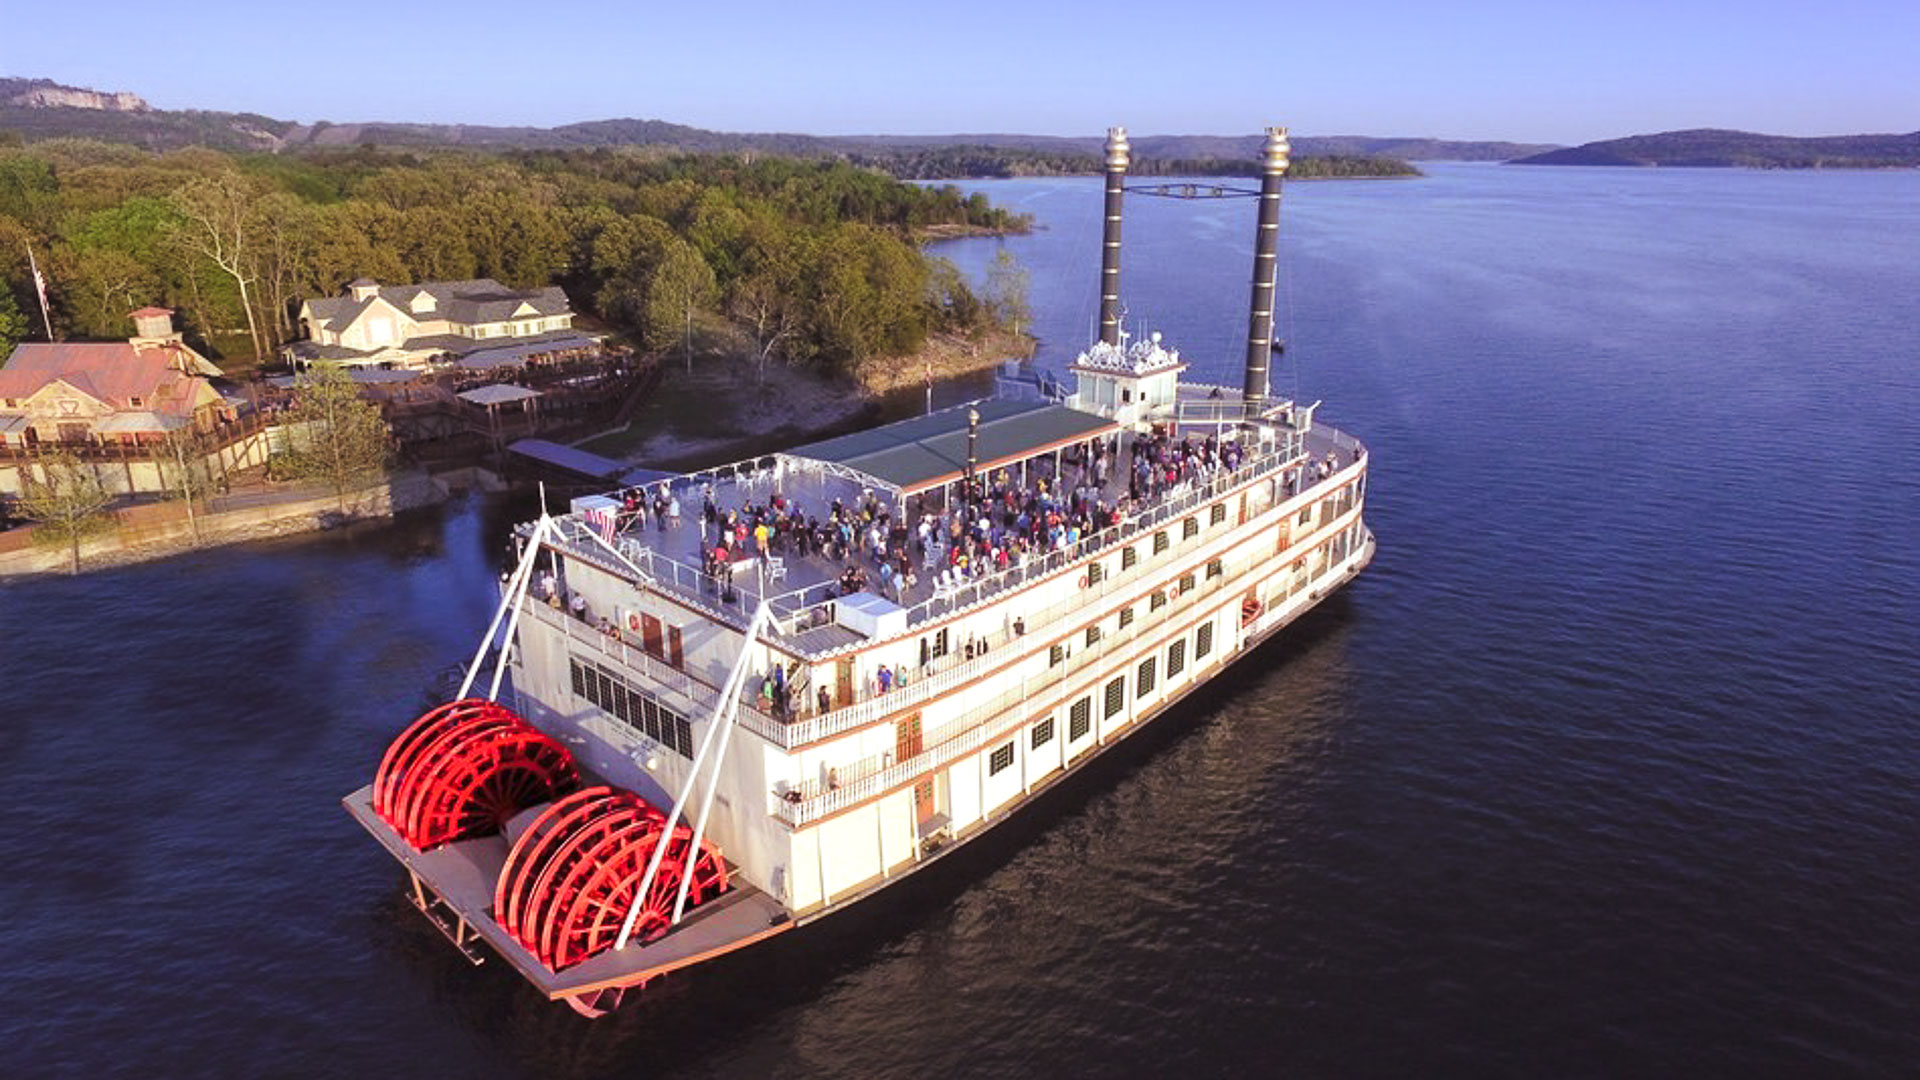 190303 2019 Showboat Branson LandingBelle NOP - Showboat Branson Belle Ready to Cruise into 2019 Season